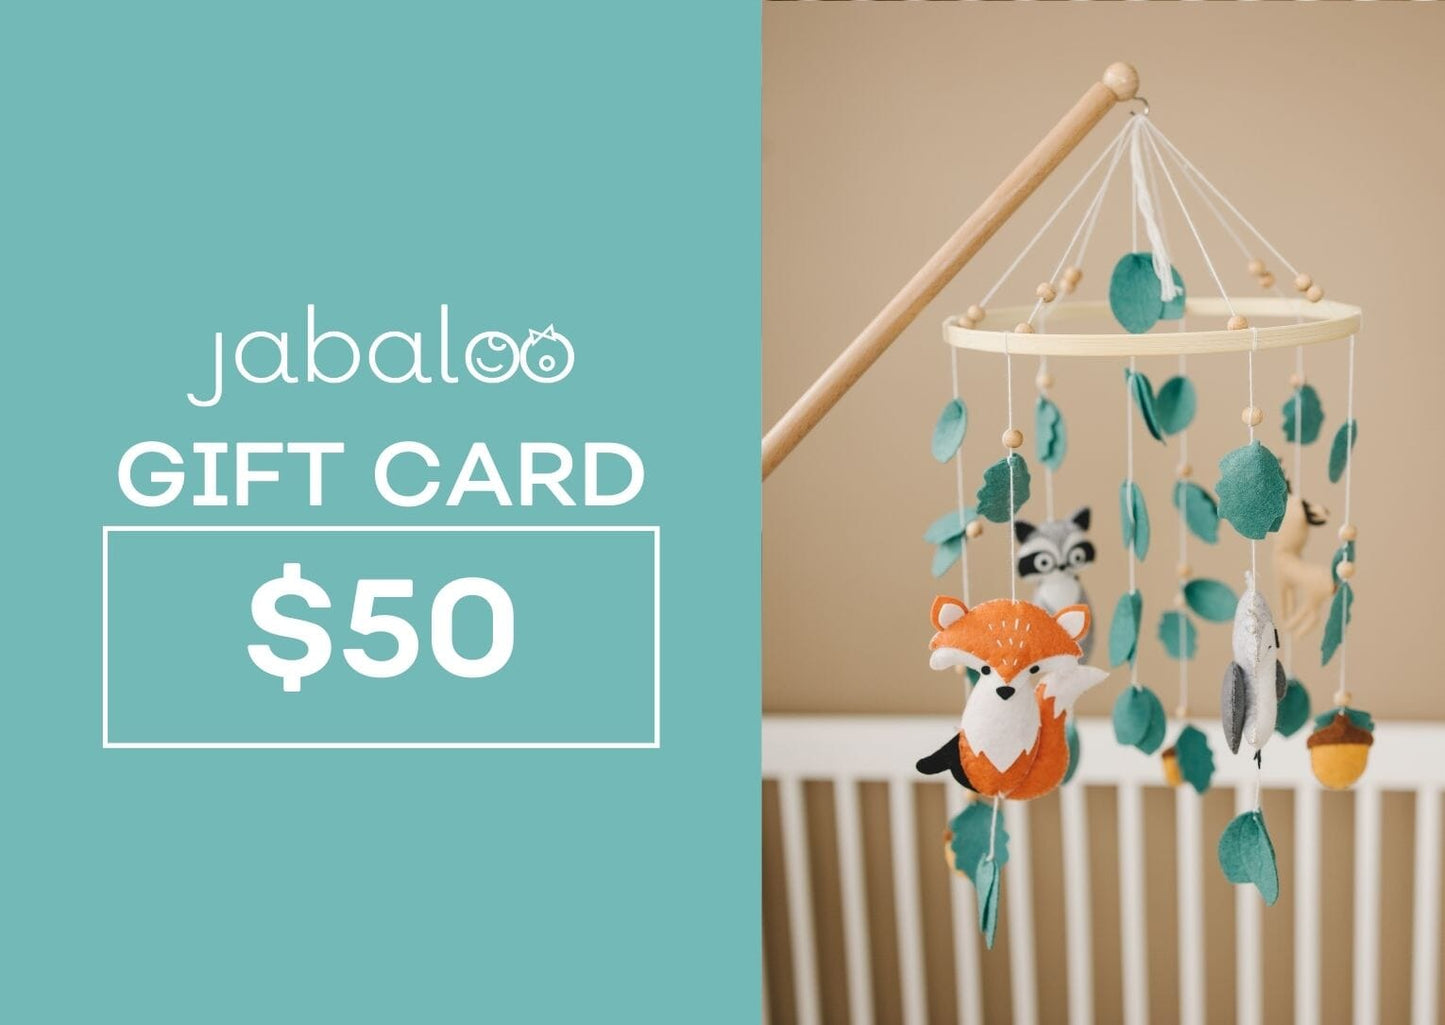 Gift Card Jabaloo Fox US$50 